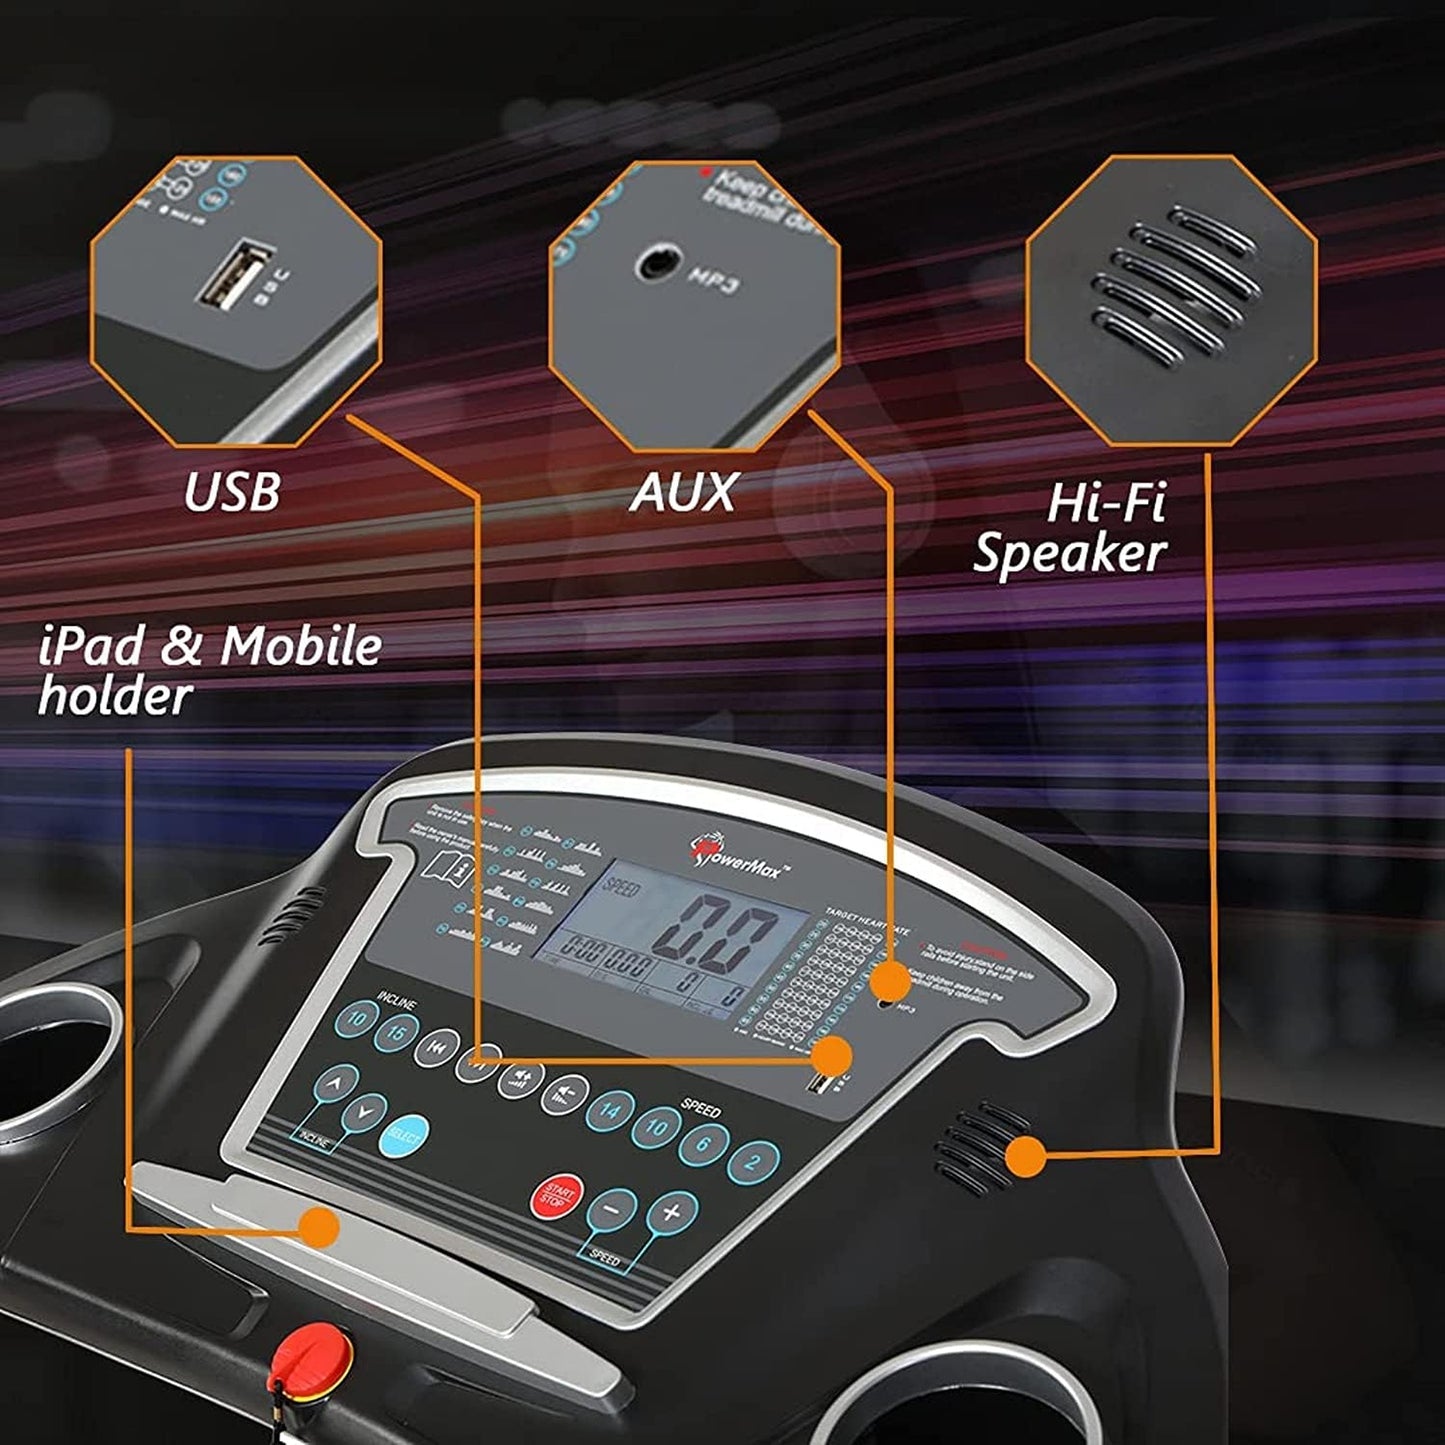 PowerMax Automatic Incline, & Semi-Auto Lubrication Treadmill, TDA-230M